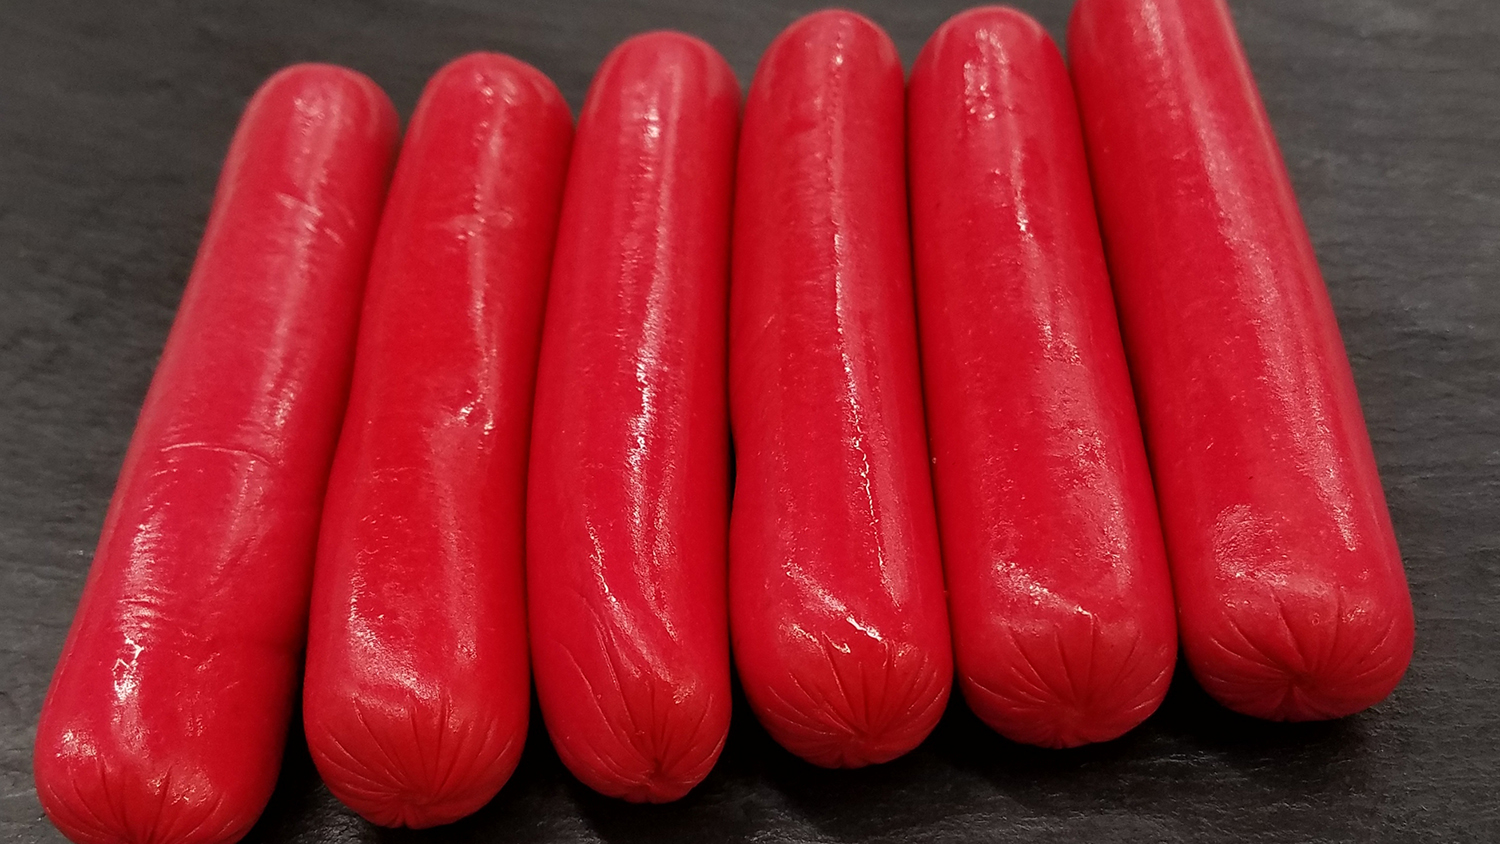 hanson red hotdogs